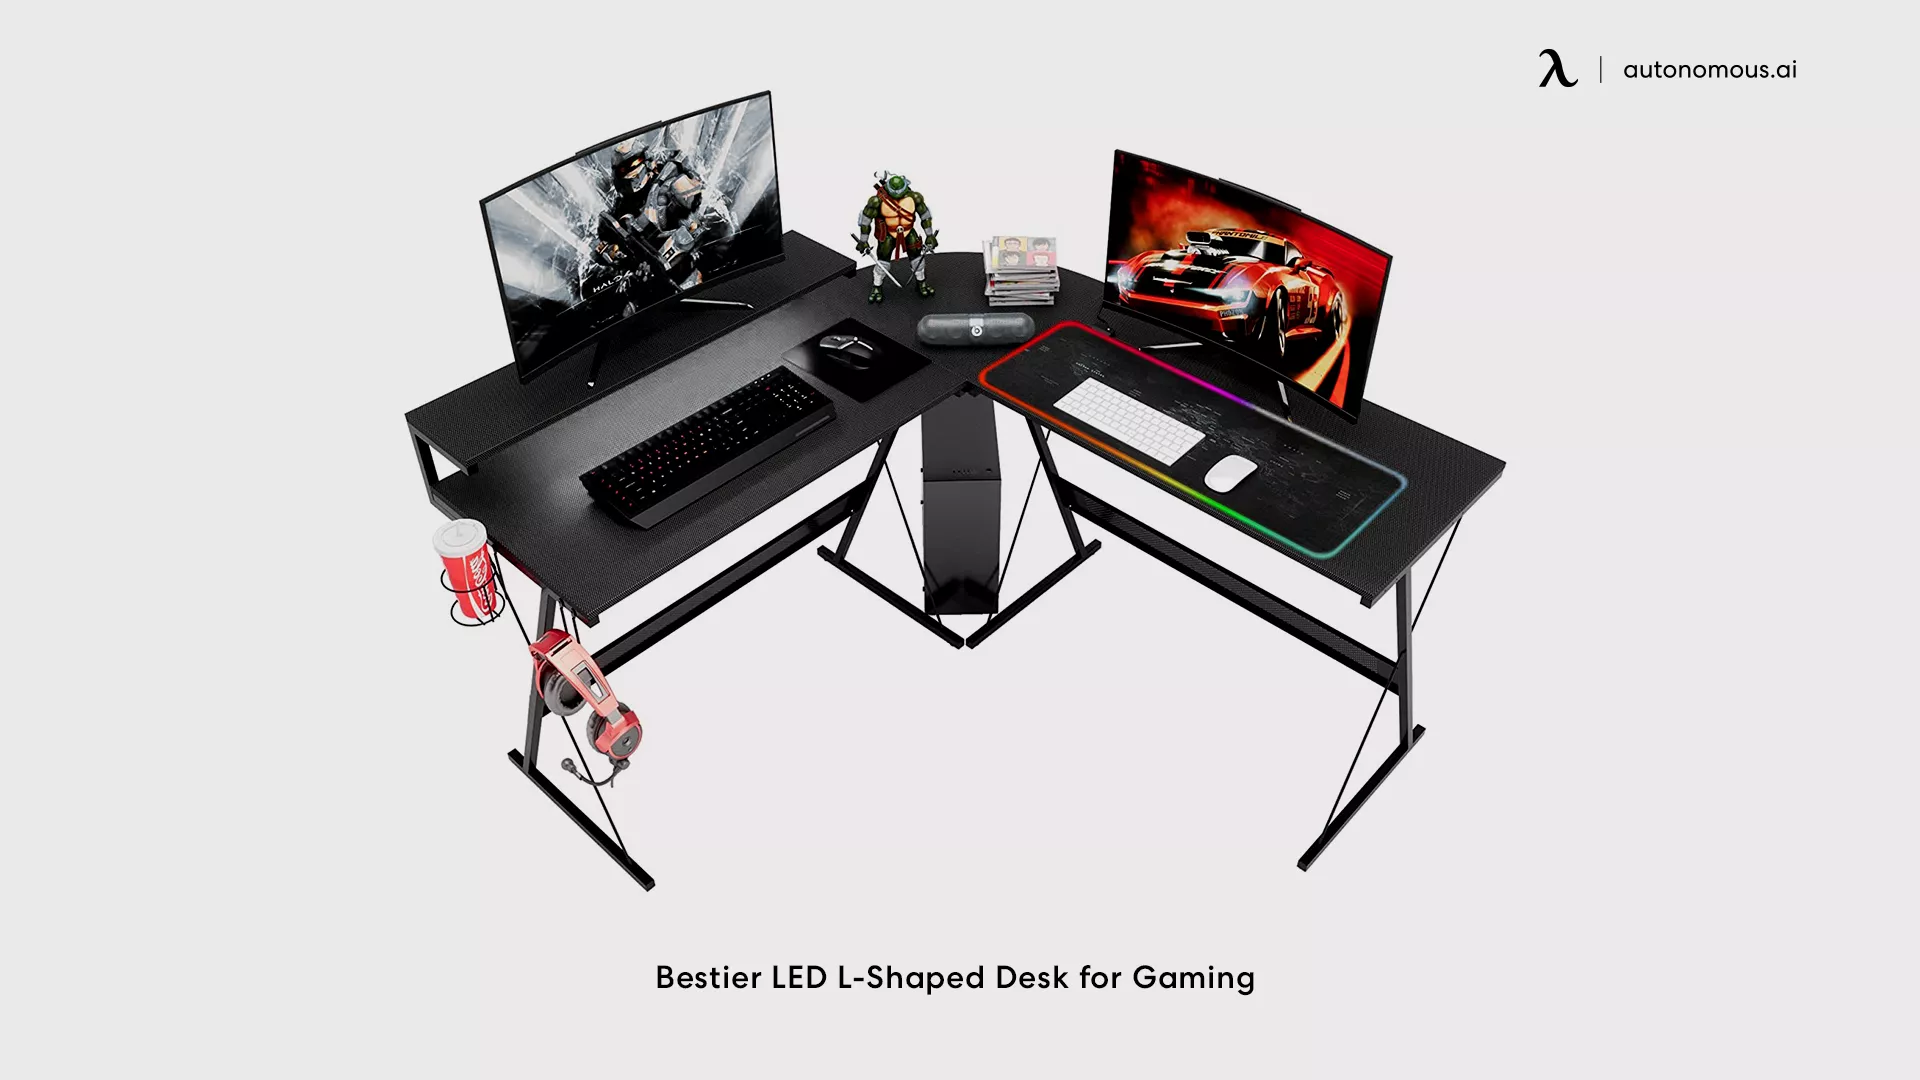 Bestier LED L-Shaped Gaming Desk